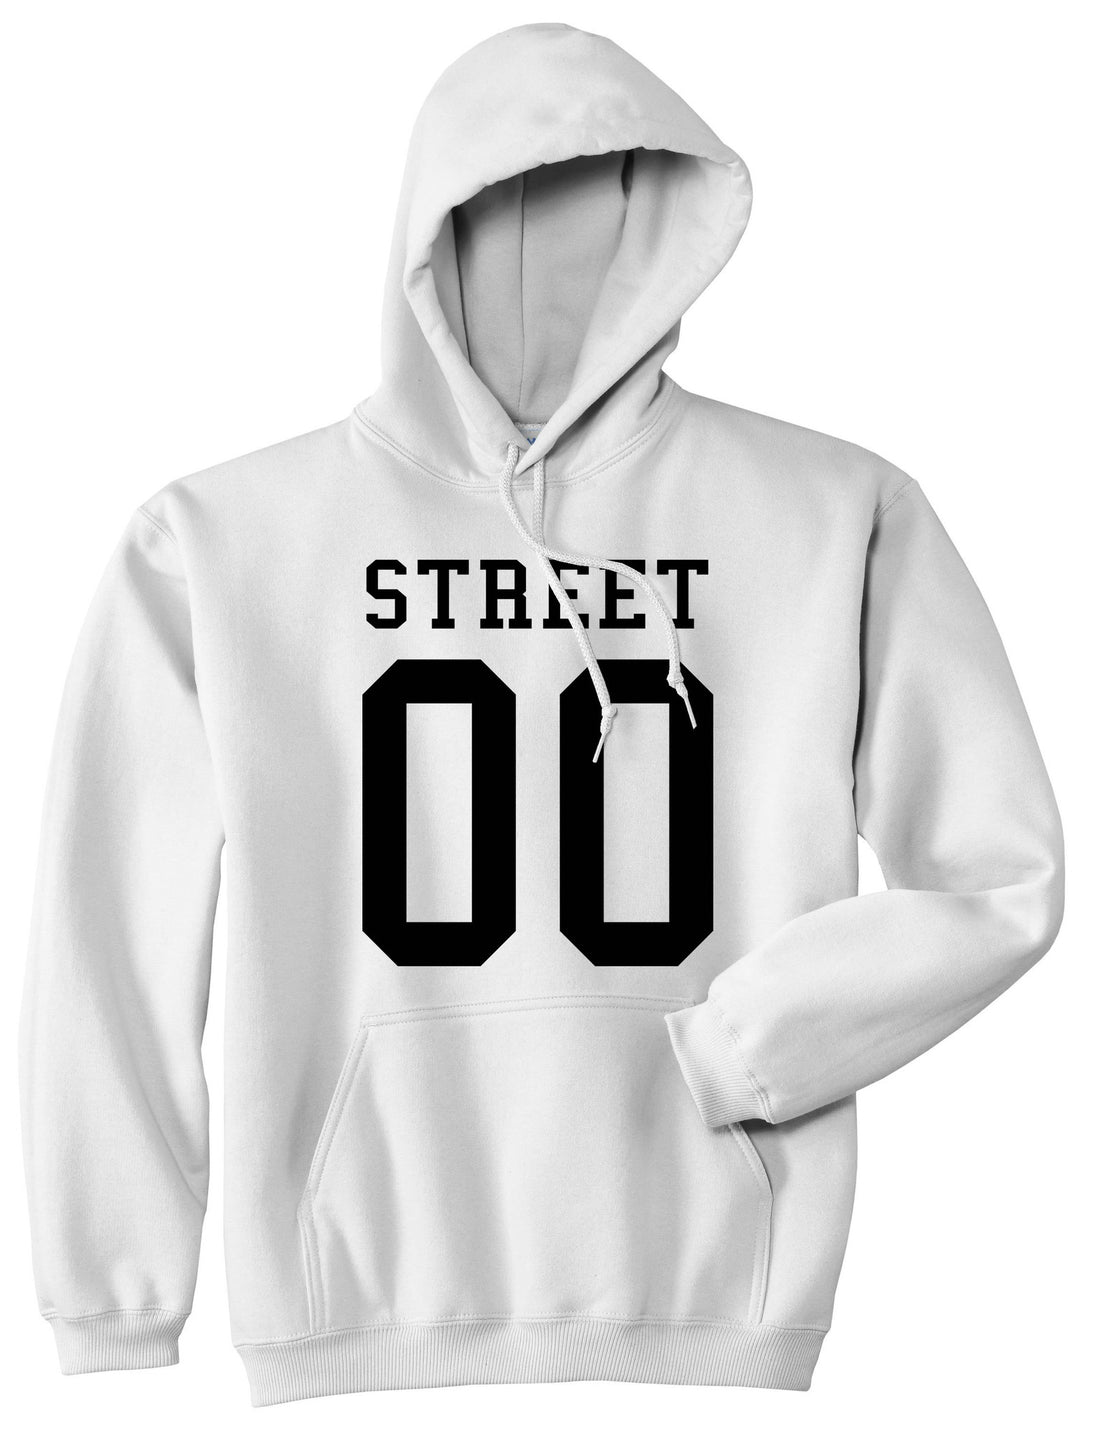 Street Team 00 Jersey Boys Kids Pullover Hoodie Hoody in White By Kings Of NY